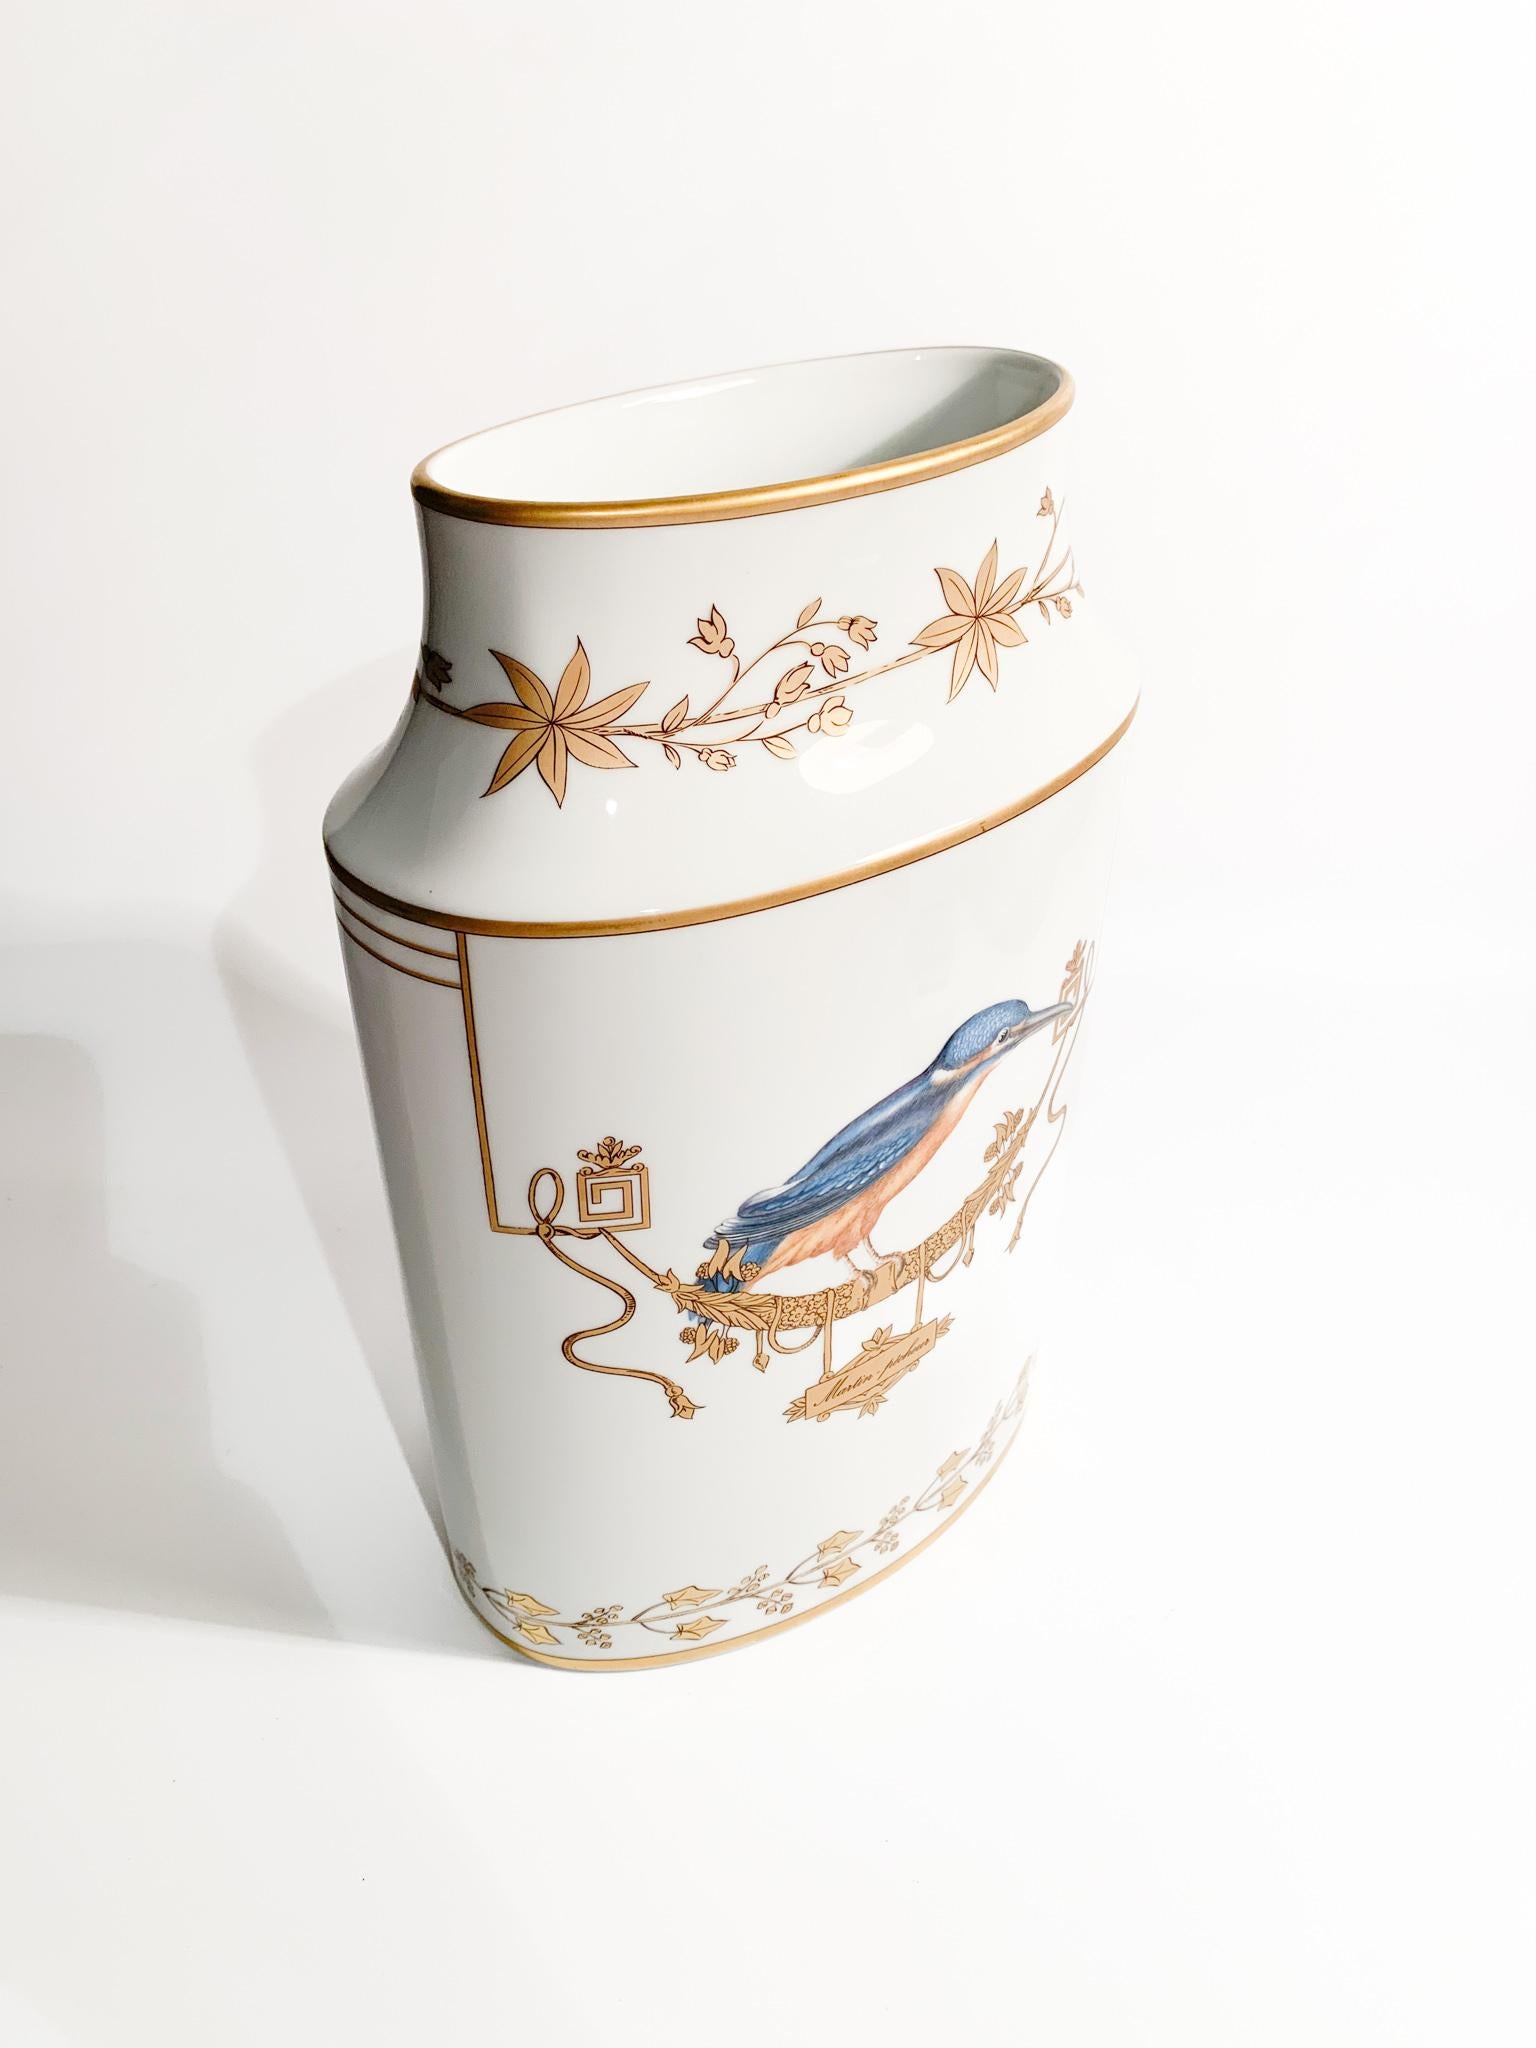 Italian Elliptical Porcelain Volière Vase by Ginori 1735